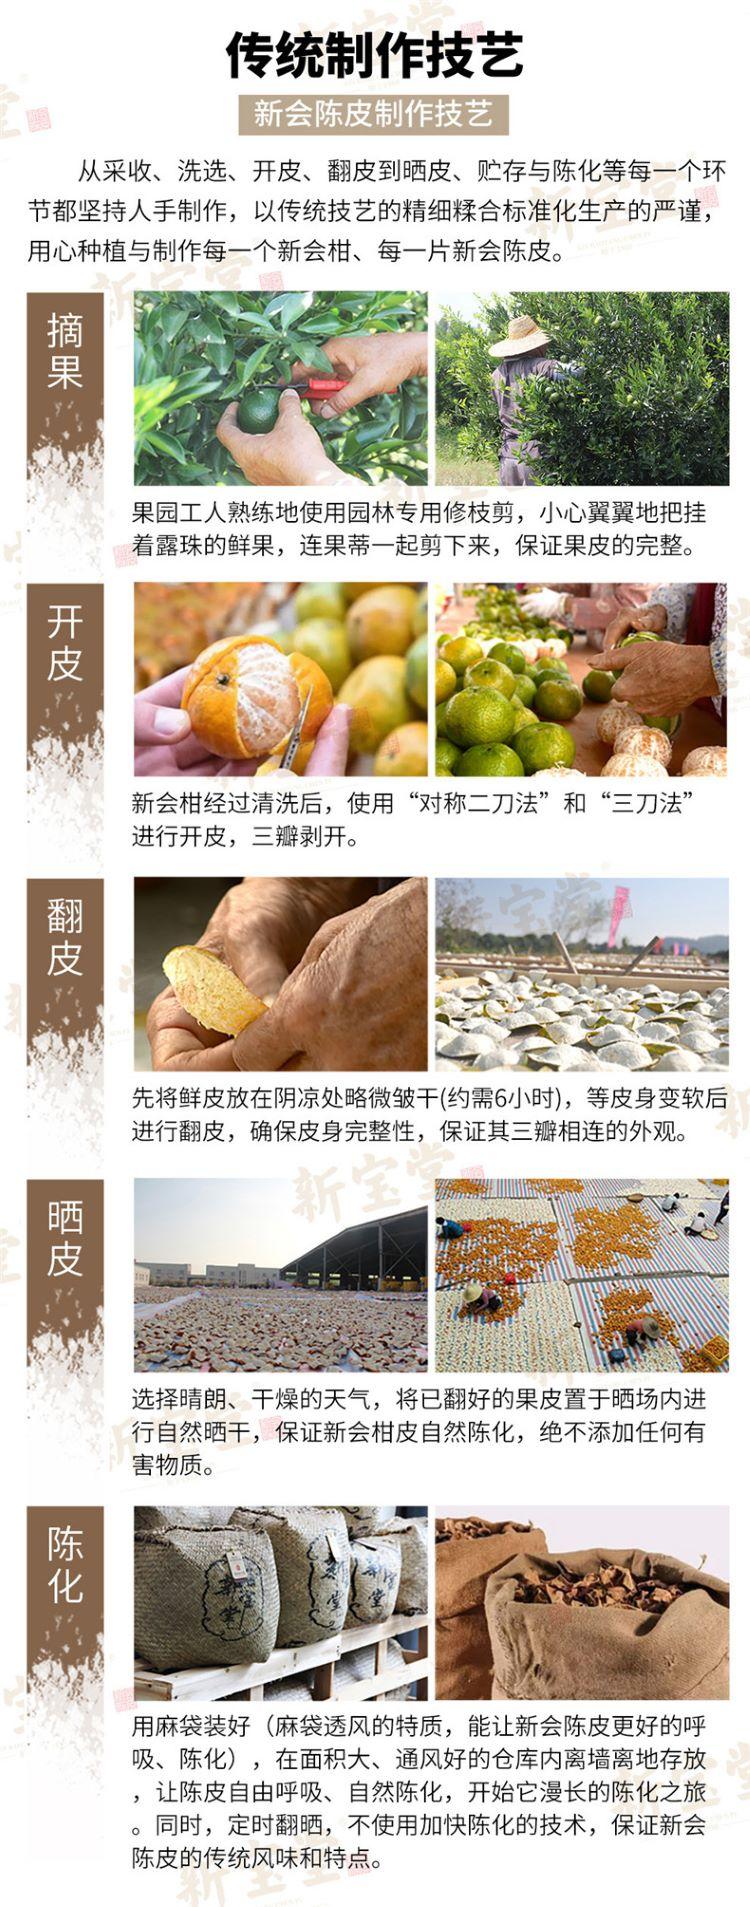 http://b2bwings-goods-image.oss-cn-shenzhen.aliyuncs.com/b1b3fee9-0003-456a-9b36-18805141e9b8.jpg